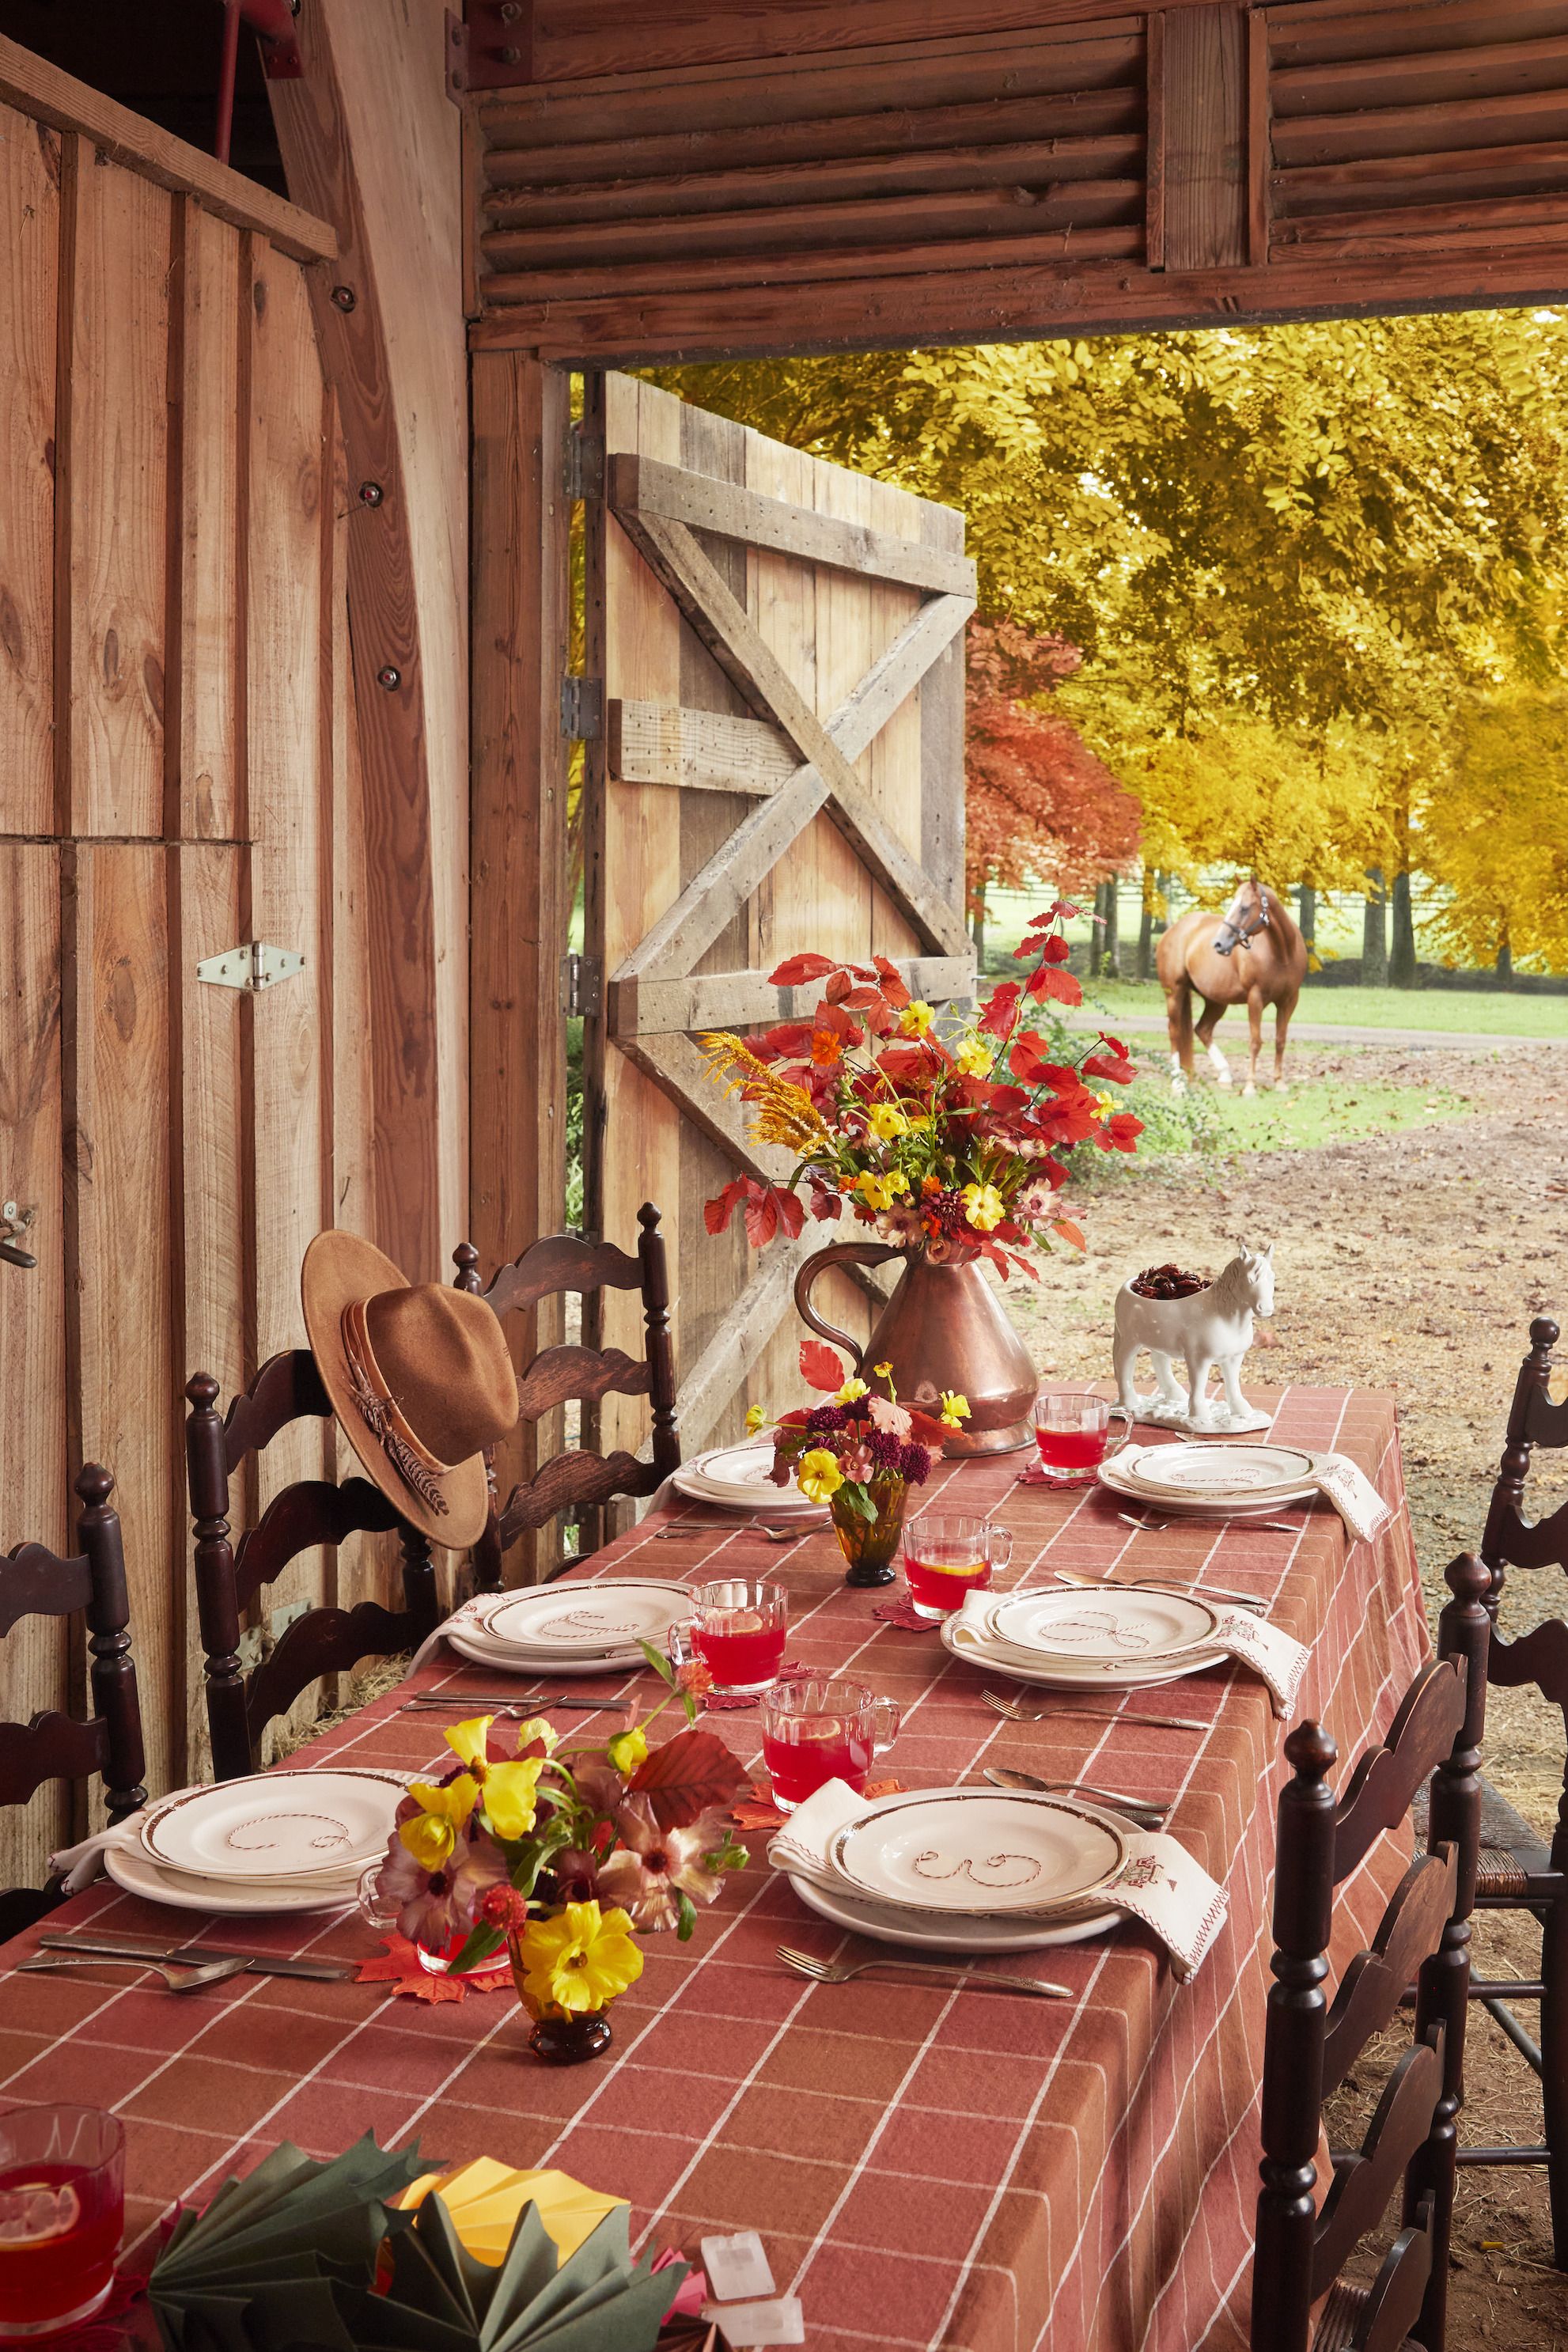 Thanksgiving Tablescape Ideas - COBS Bread USA